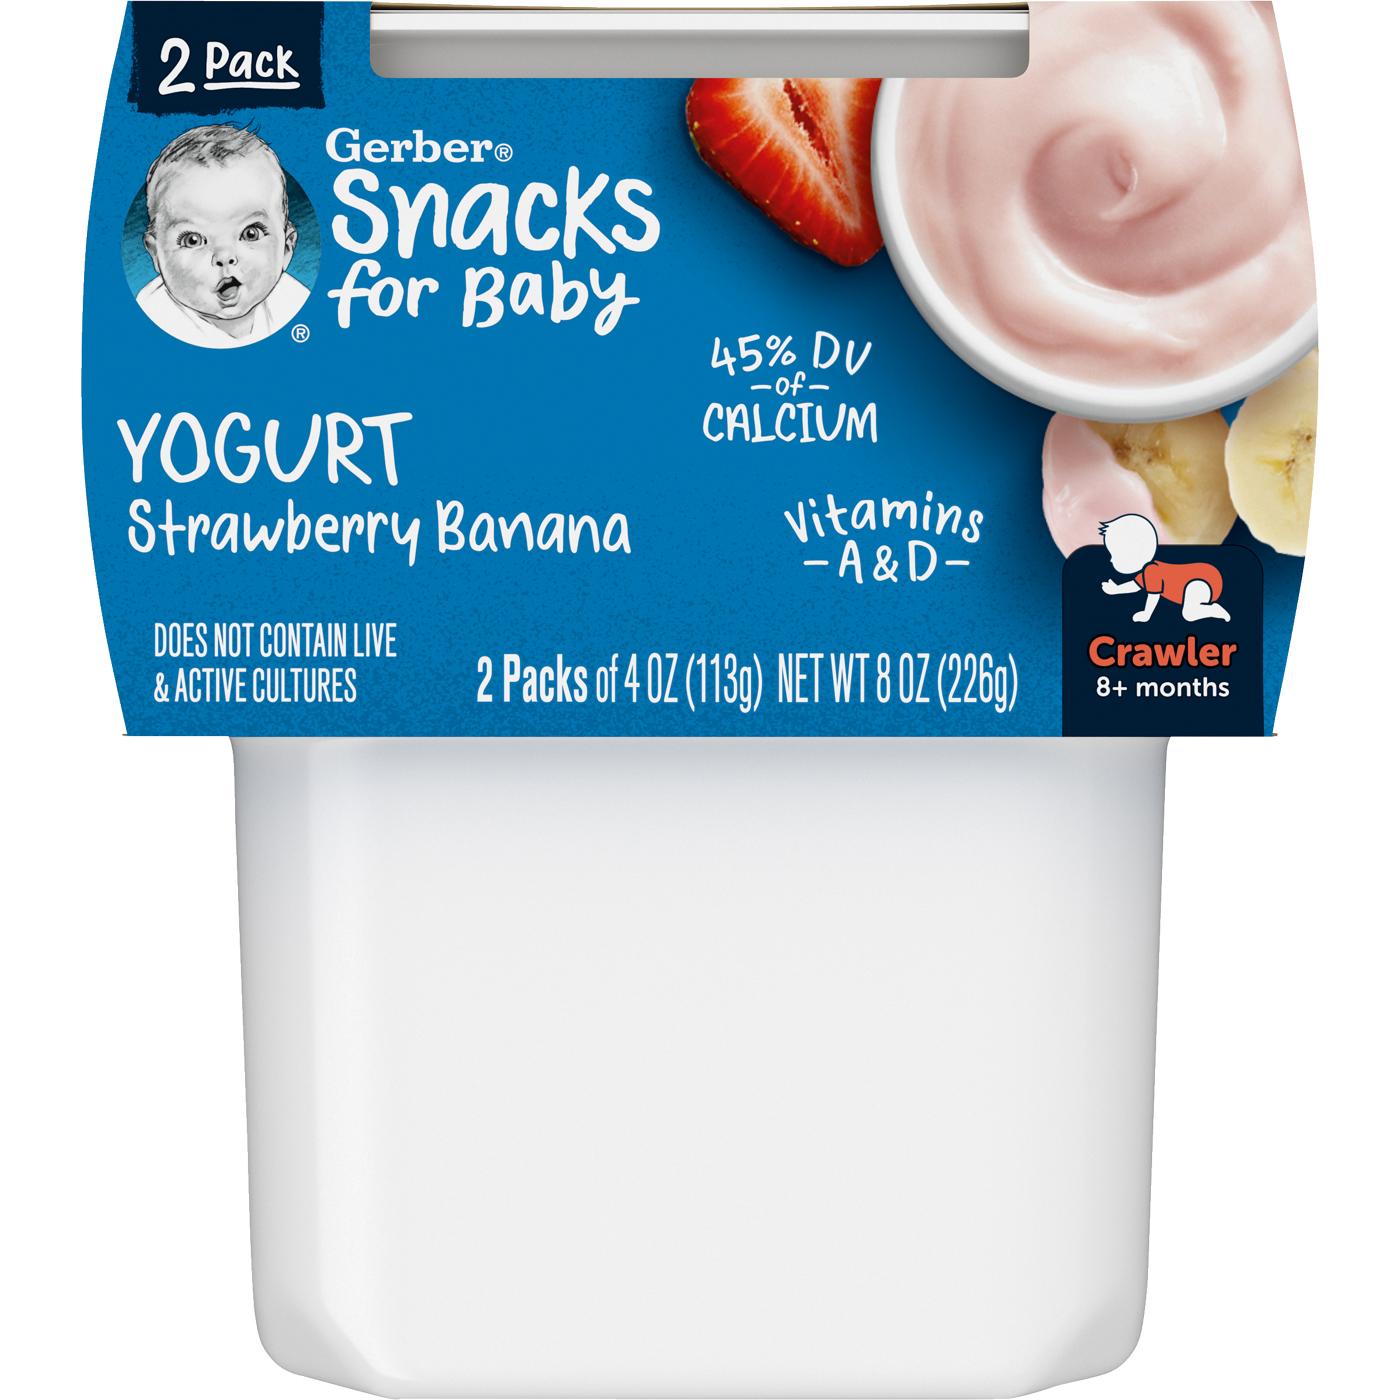 Gerber Snacks for Baby Yogurt Blend - Strawberry Banana; image 1 of 5